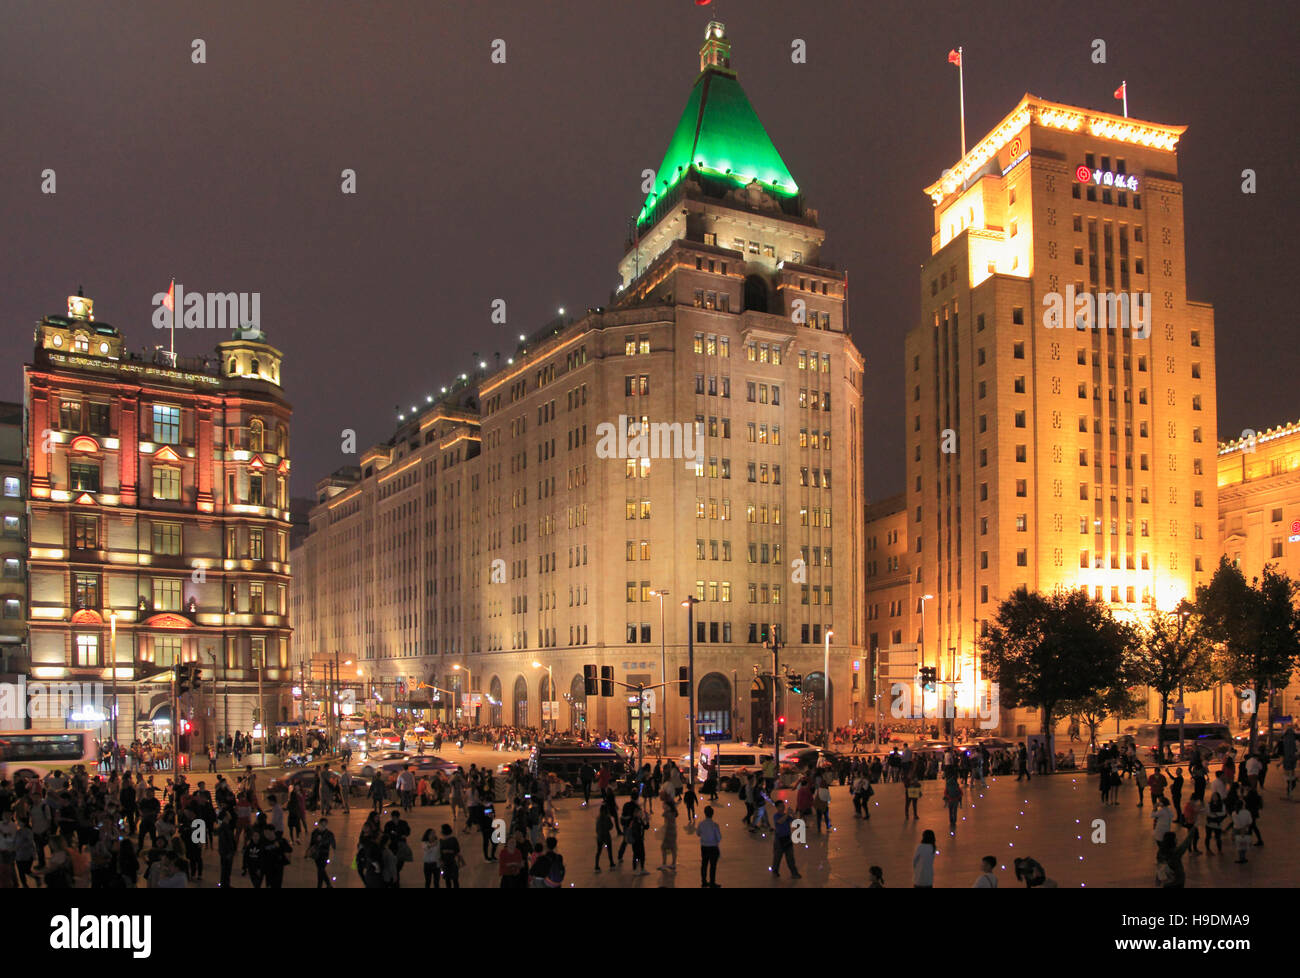 China, Shanghai, Bund, Palace Hotel, Peace Hotel, Bank of China, historische Architektur, Stockfoto